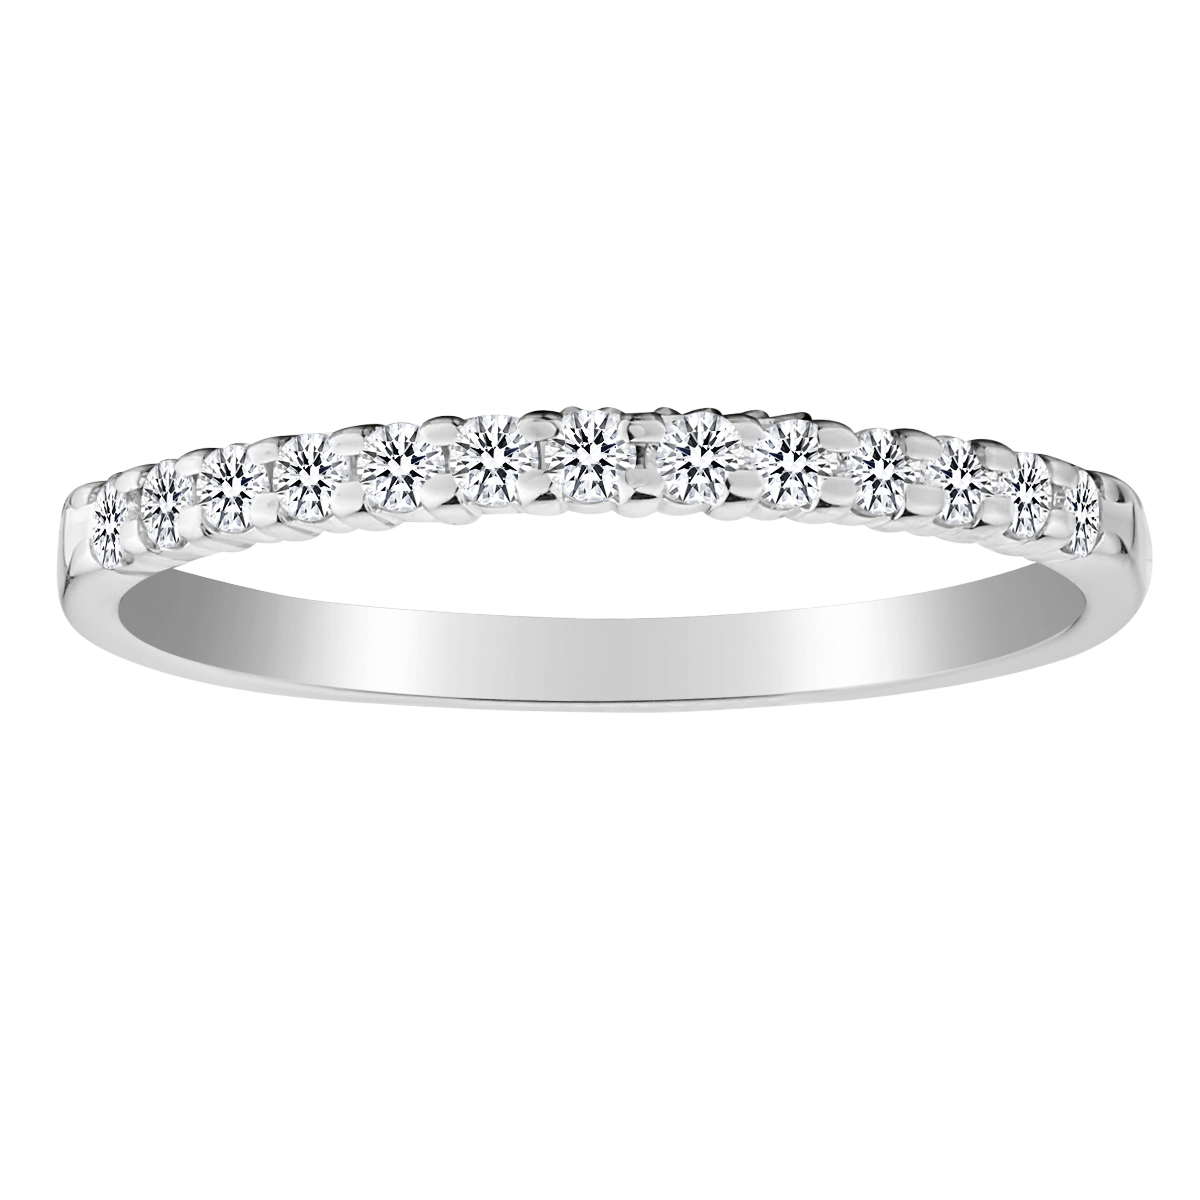 15 Carat of Diamonds Bracelet, SilverNOW